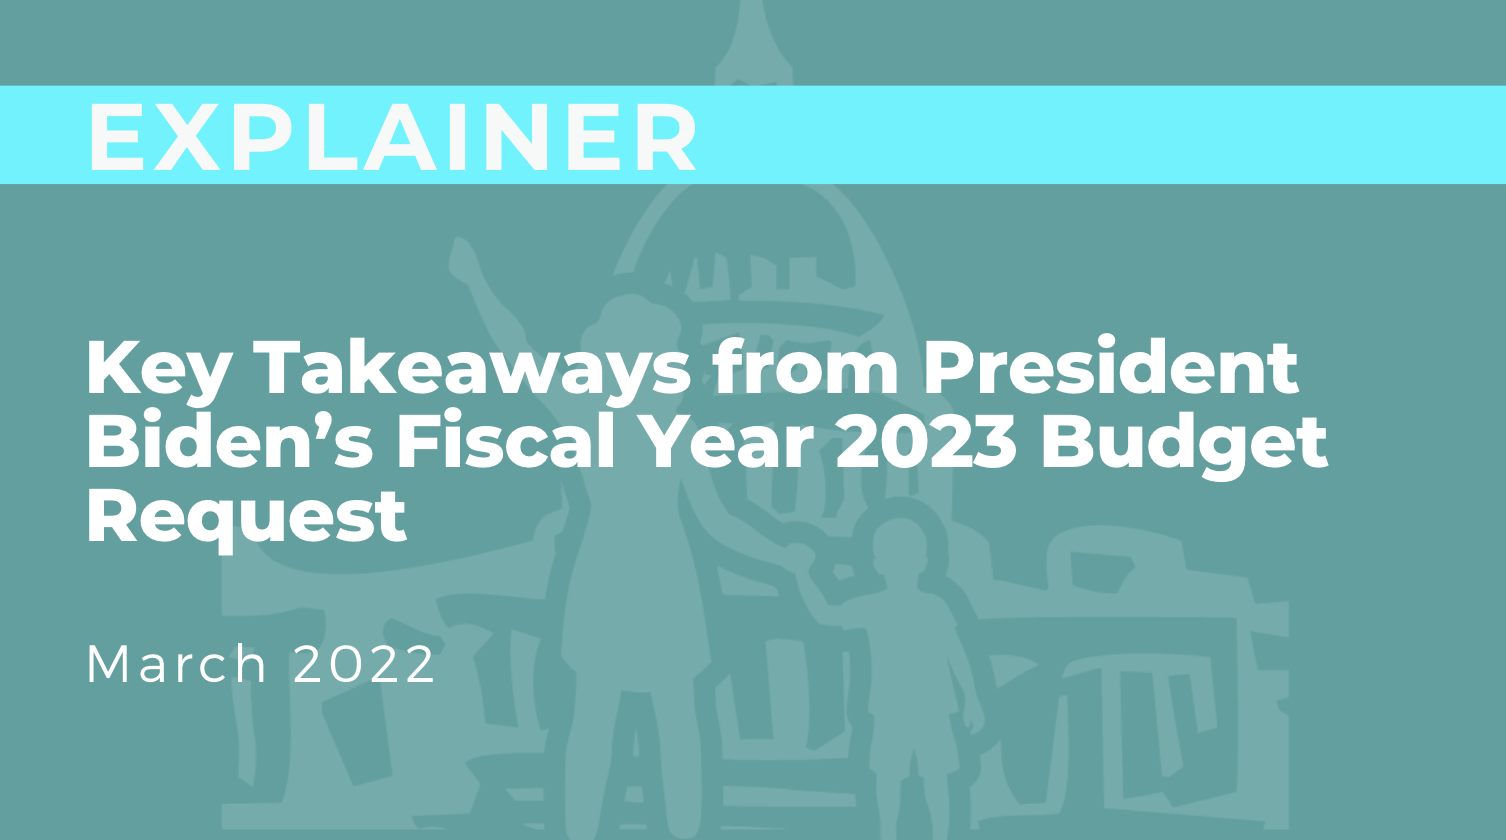 Key Takeaways from President Biden's Budget Request